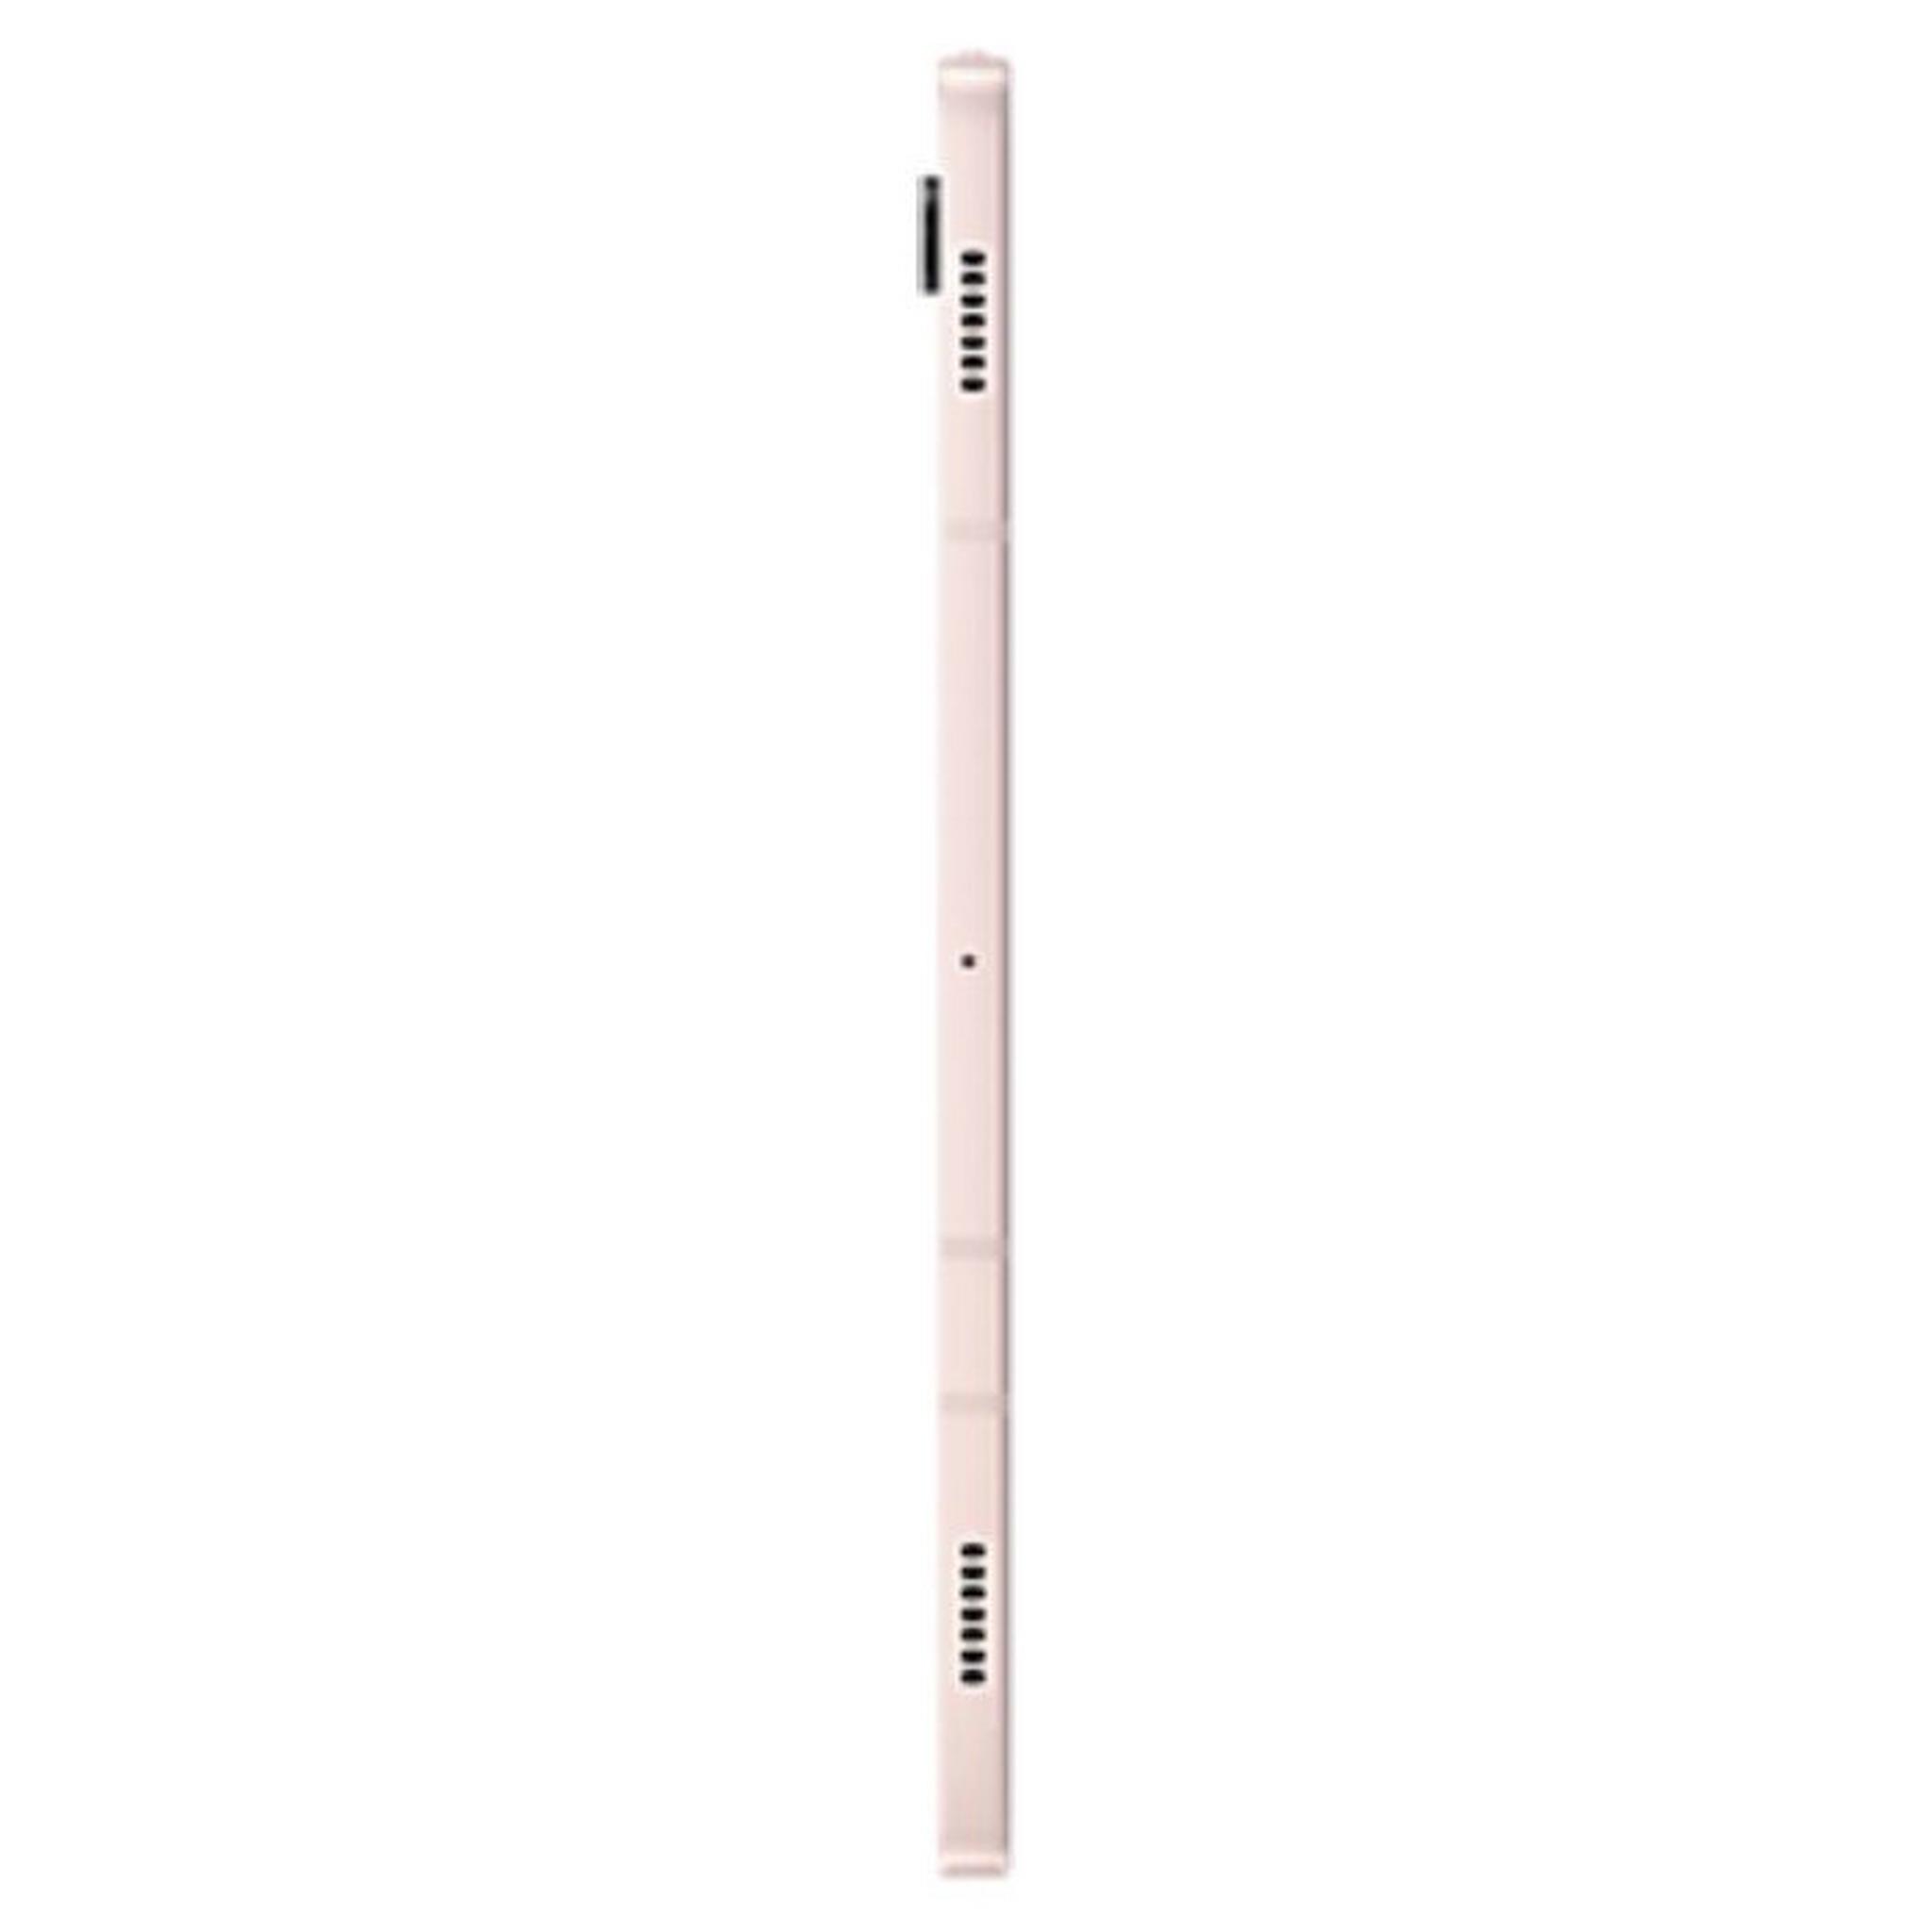 Samsung Galaxy Tab S8+ 128GB WiFi 12.4-inch Tablet - Pink Gold